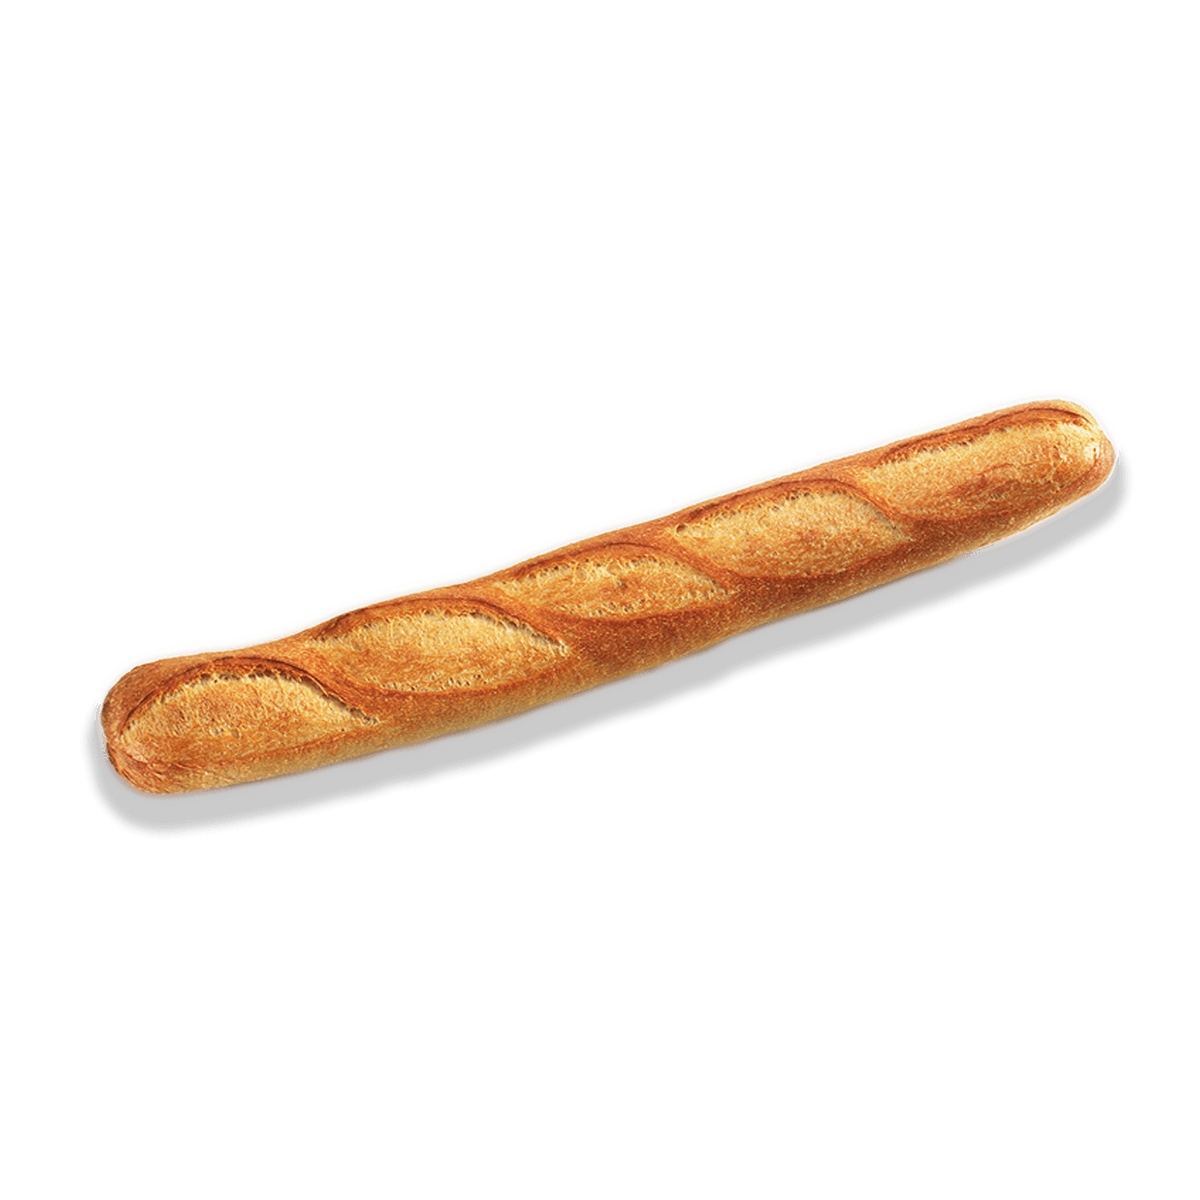 golden baguette bread on the side